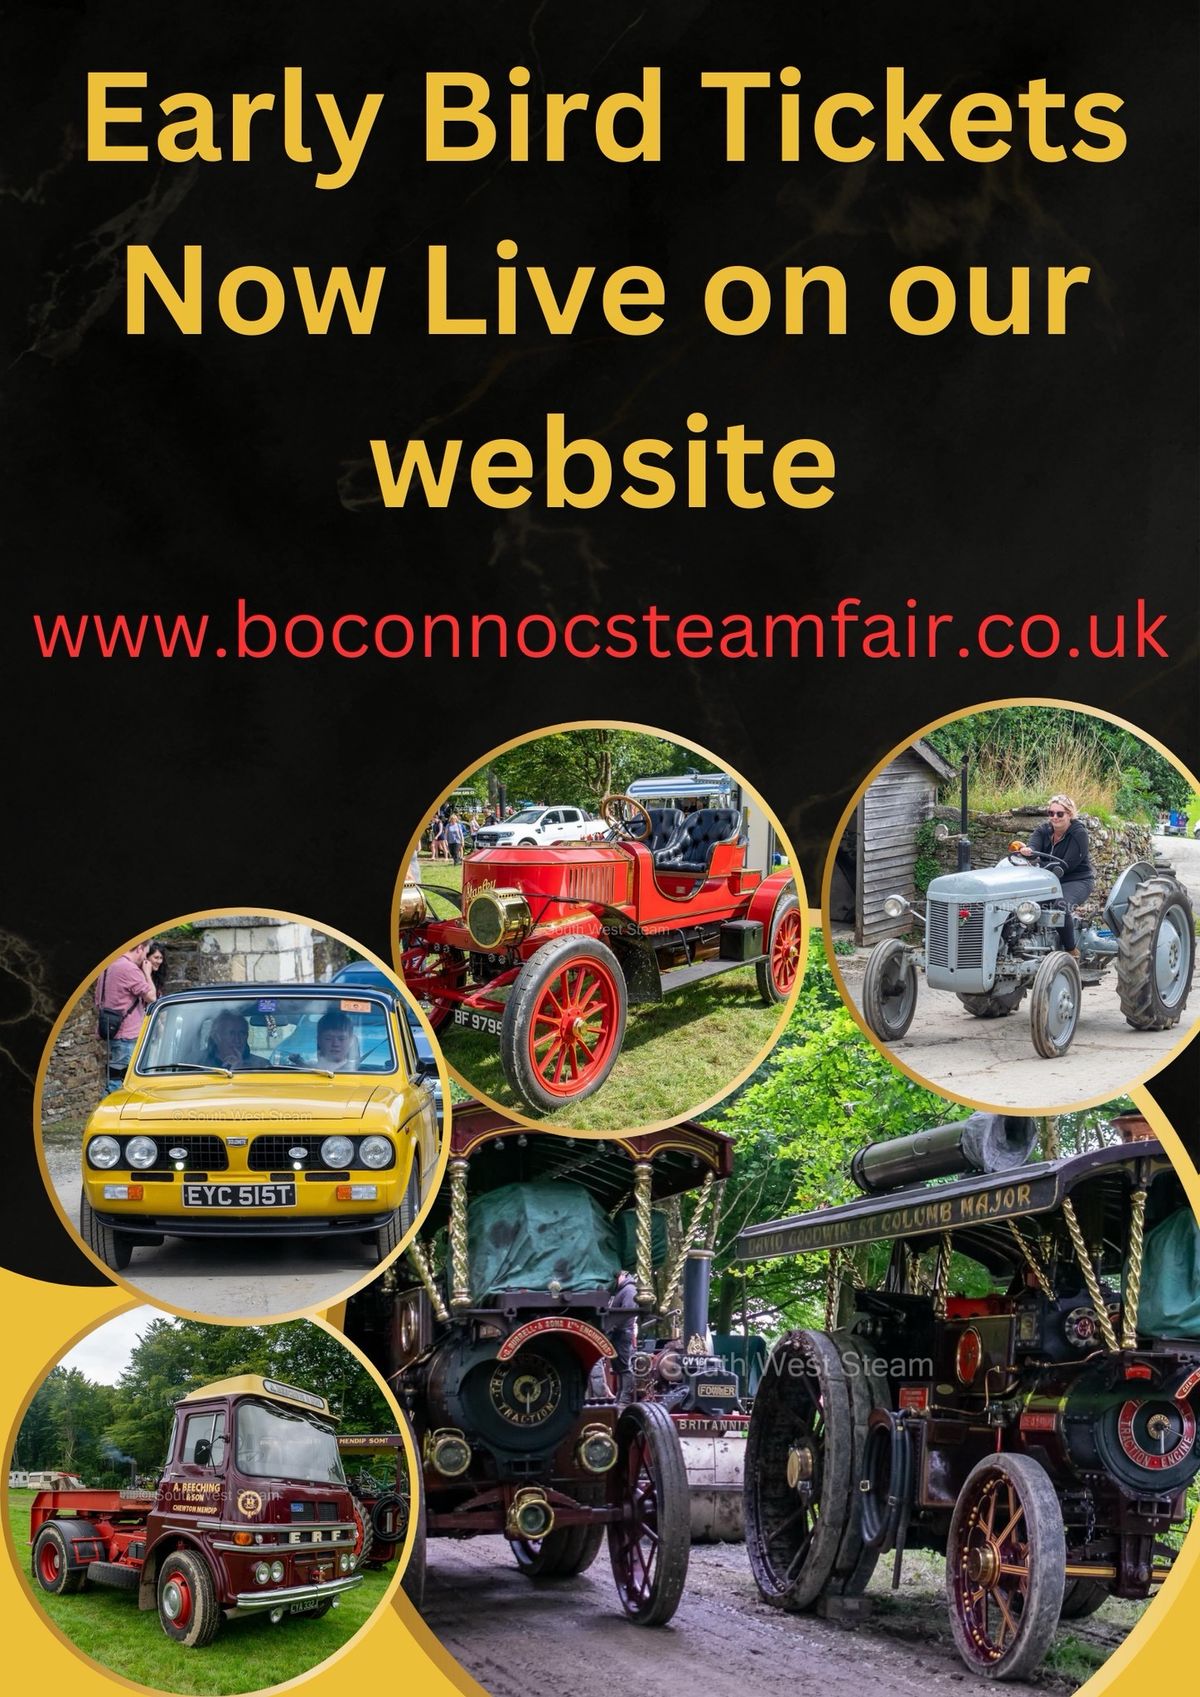 Boconnoc Steam Fair